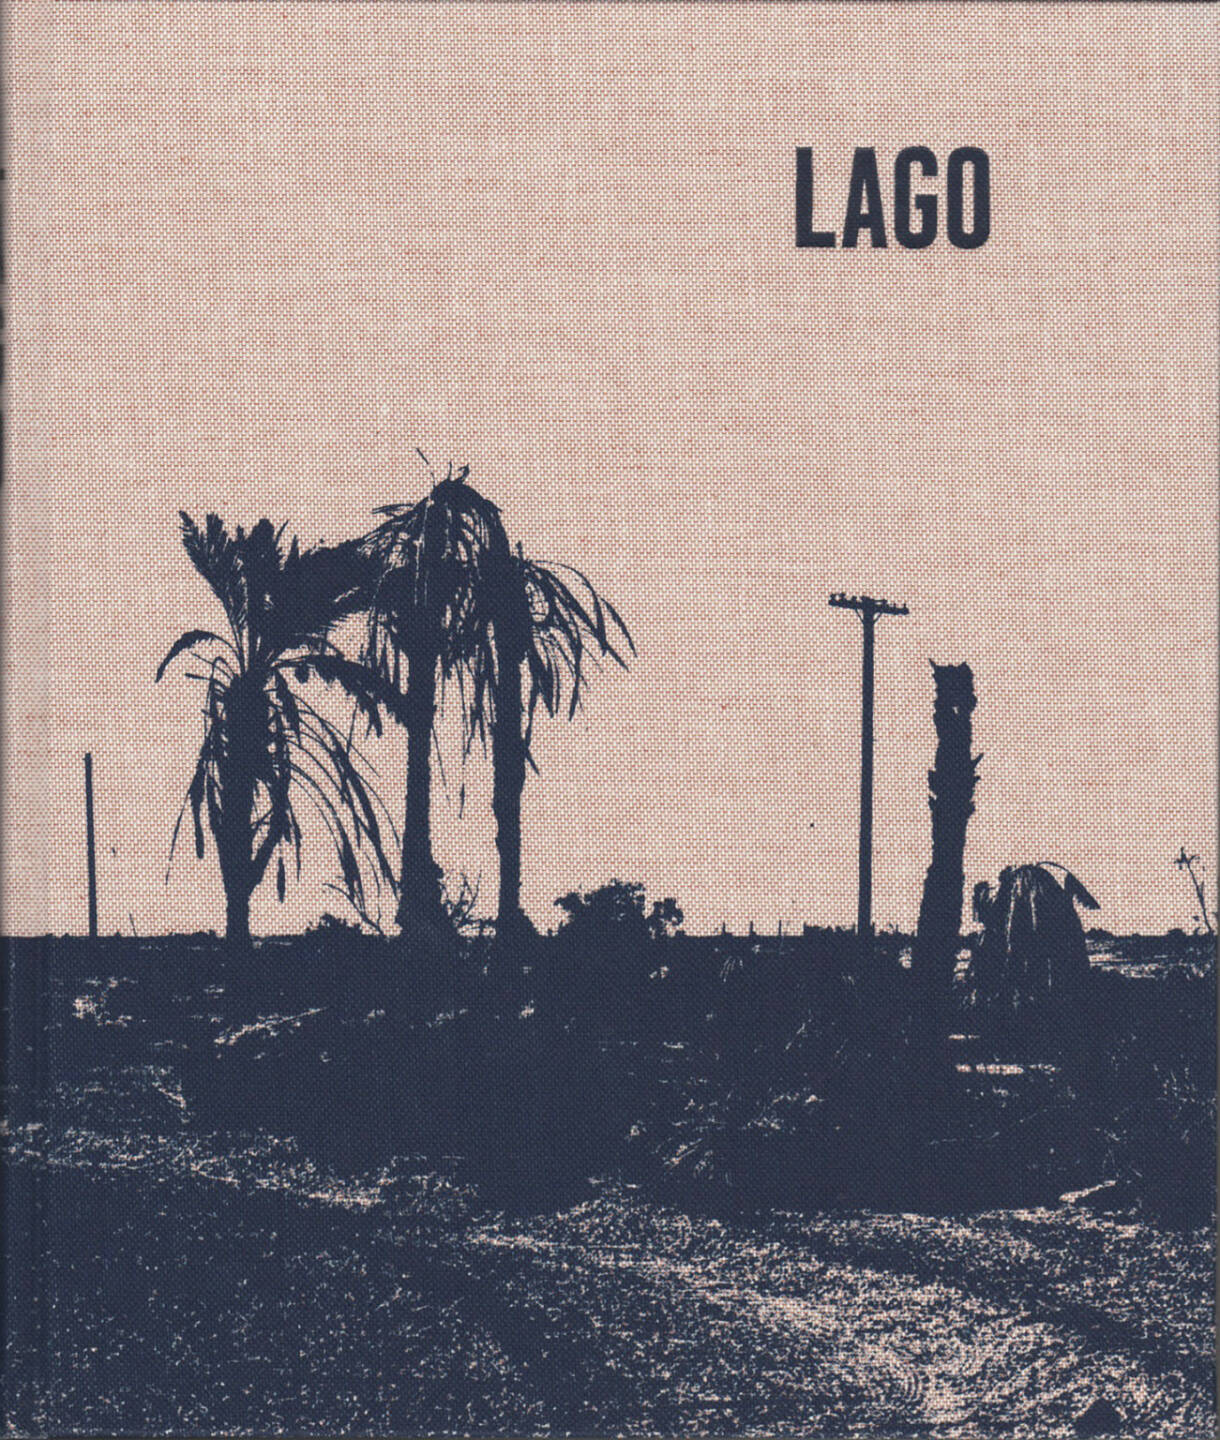 Ron Jude - Lago, MACK Books 2015, Cover - http://josefchladek.com/book/ron_jude_-_lago